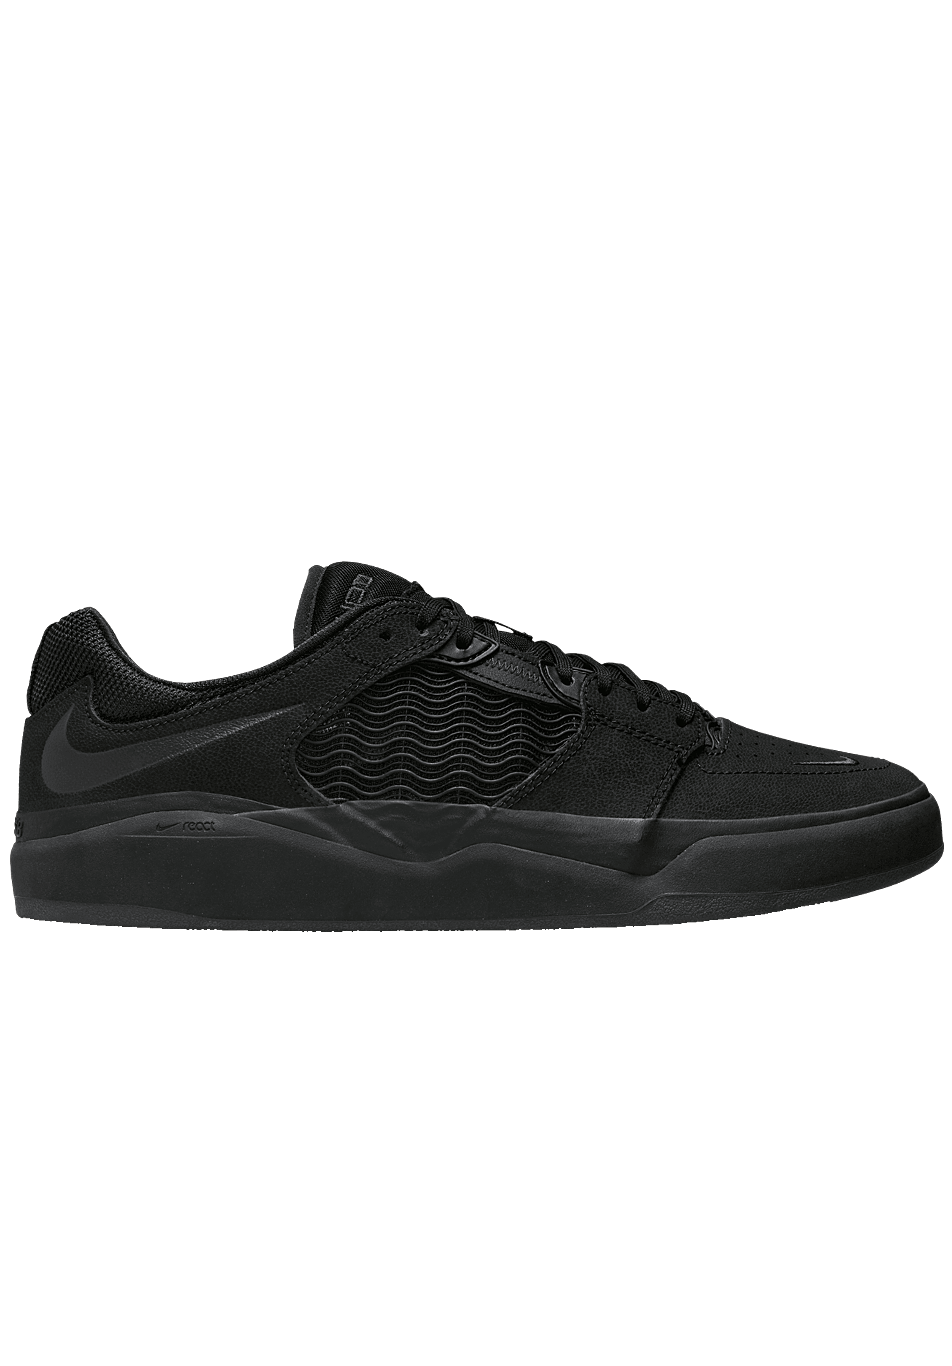 Nike SB Ishod Premium Shoe Tripple Black DZ5648-001 ONLINE ONLY